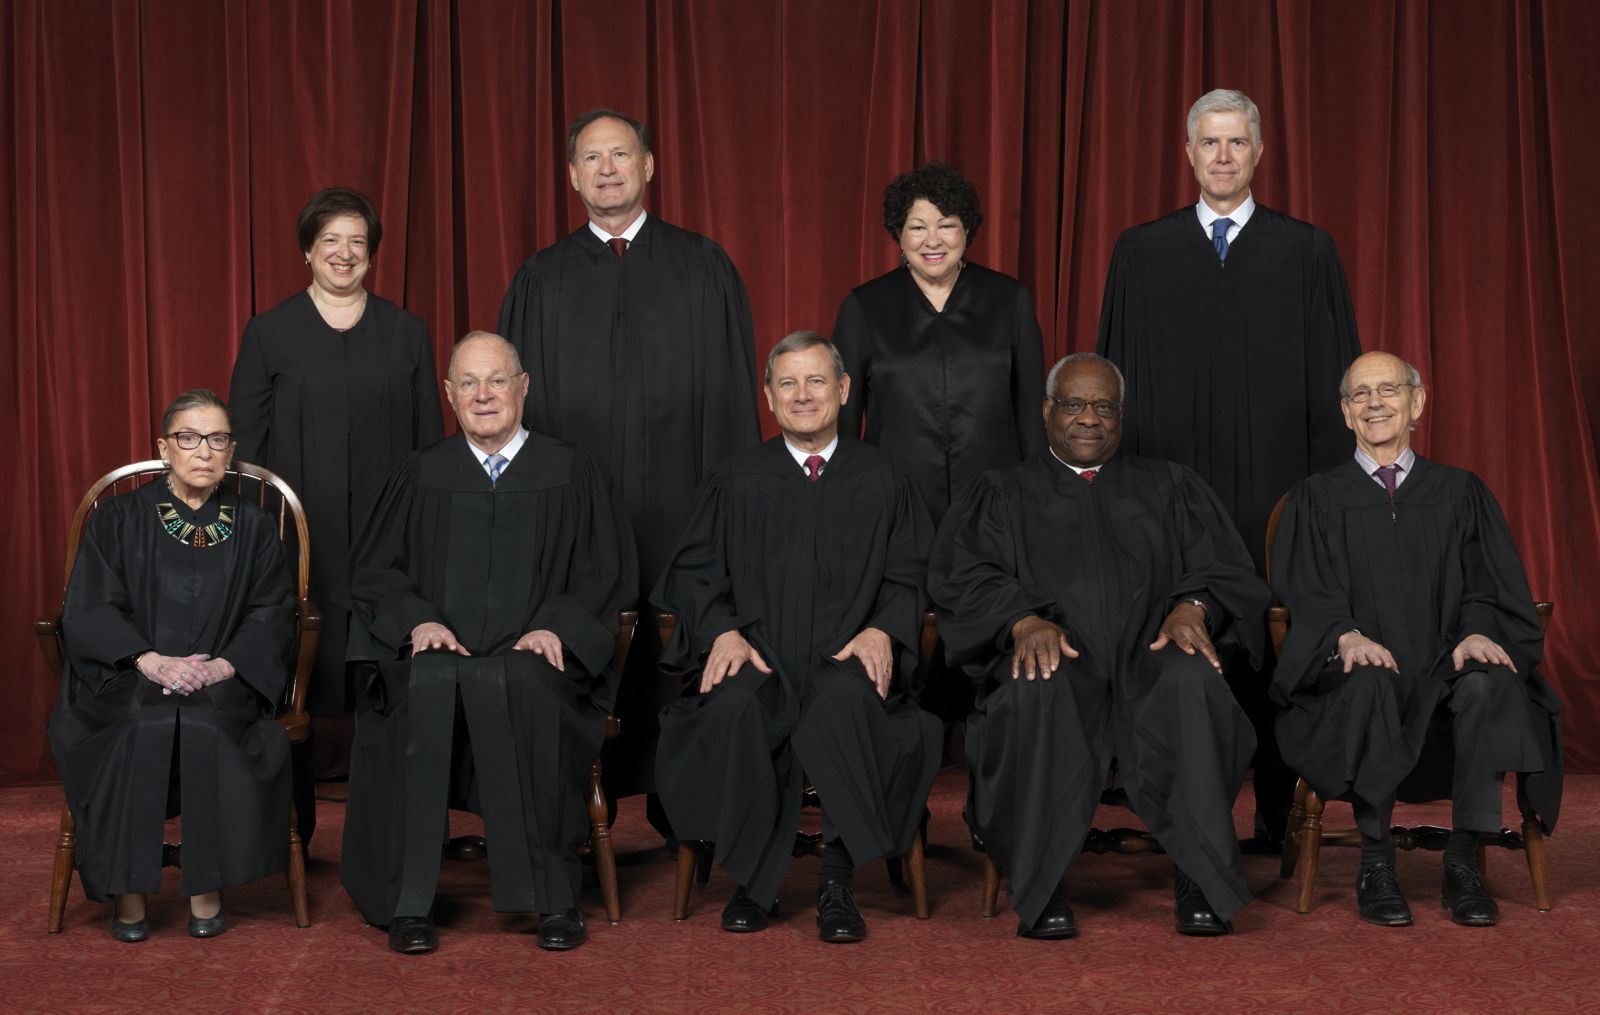 Верховный суд США, 2017 год. Фото: Franz Jantzen / Supreme Court of the United States